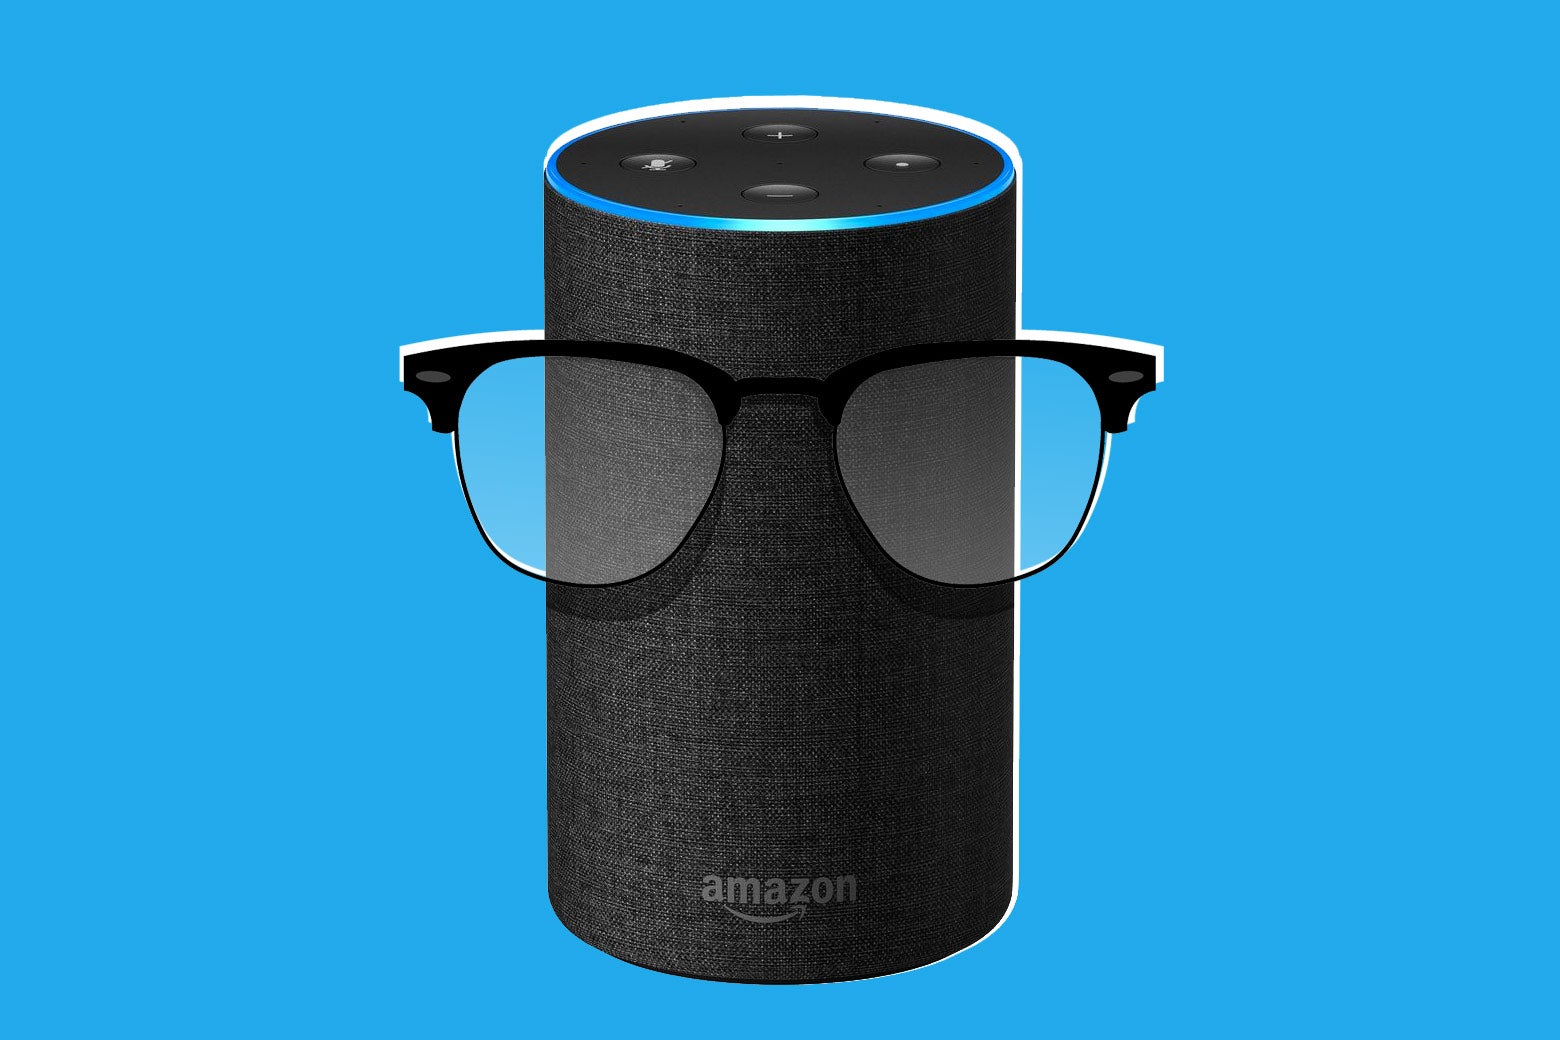 An Amazon Echo wearing glasses.